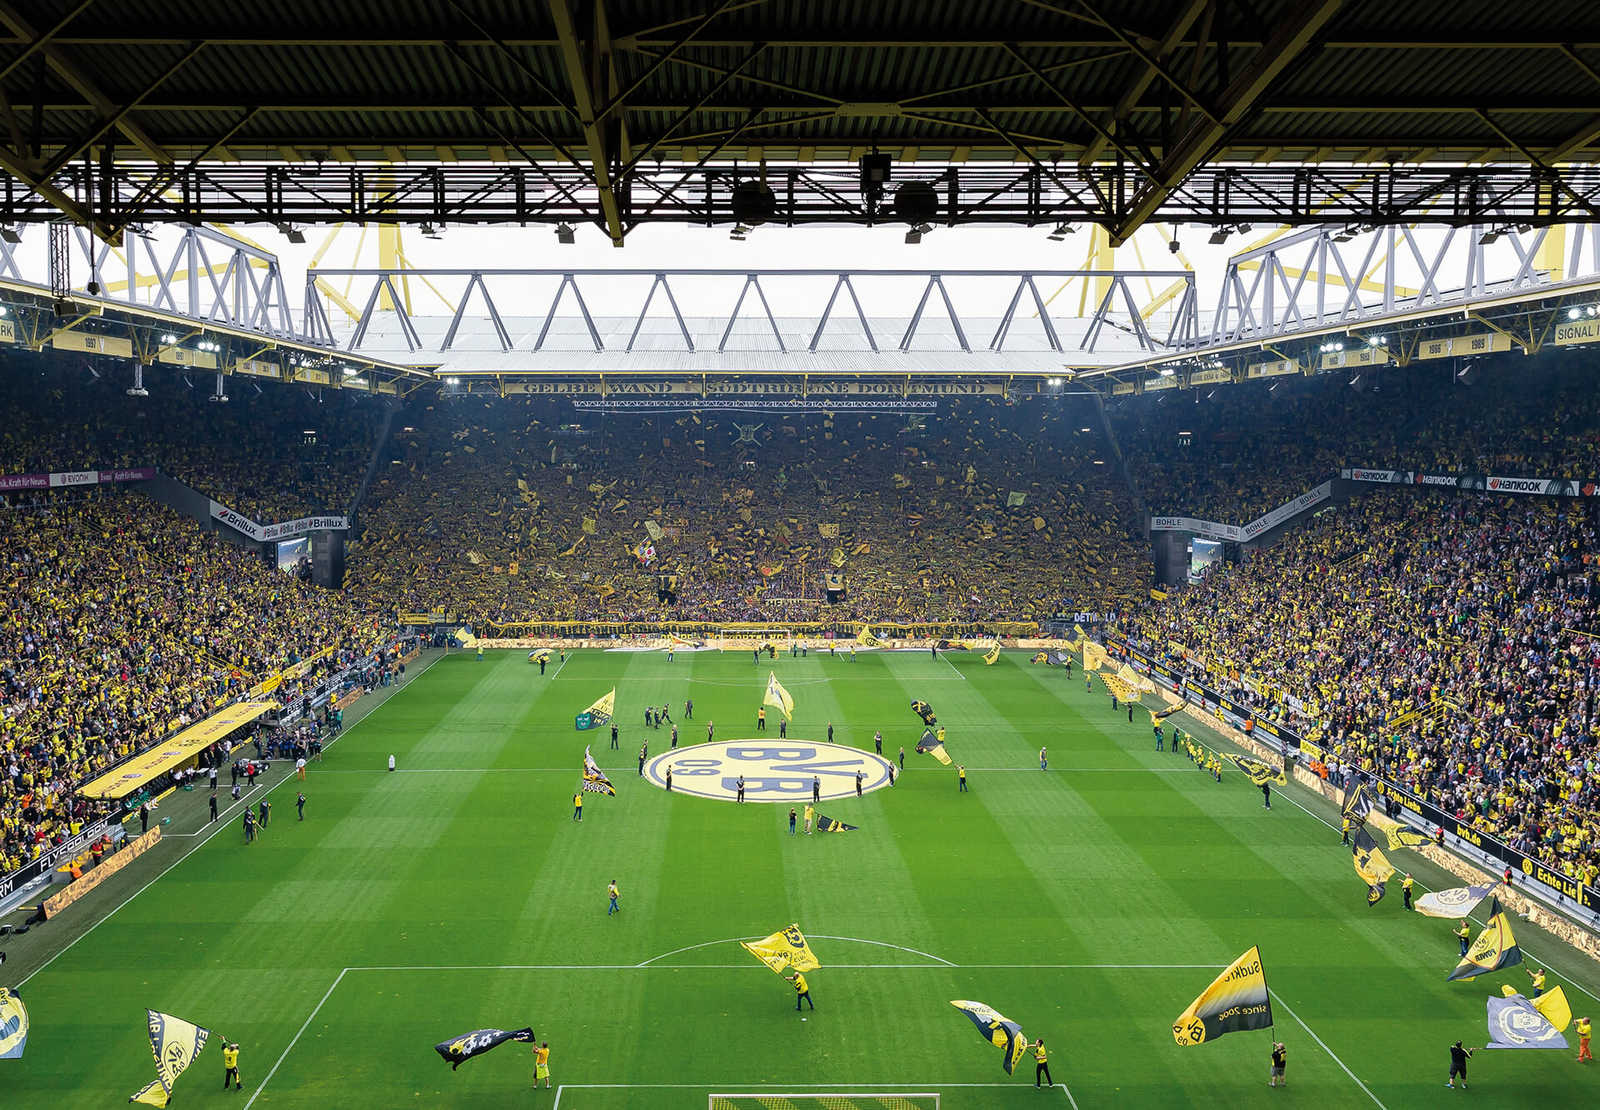         Photo wallpaper Borussia Dortmund stadium with choirs
    